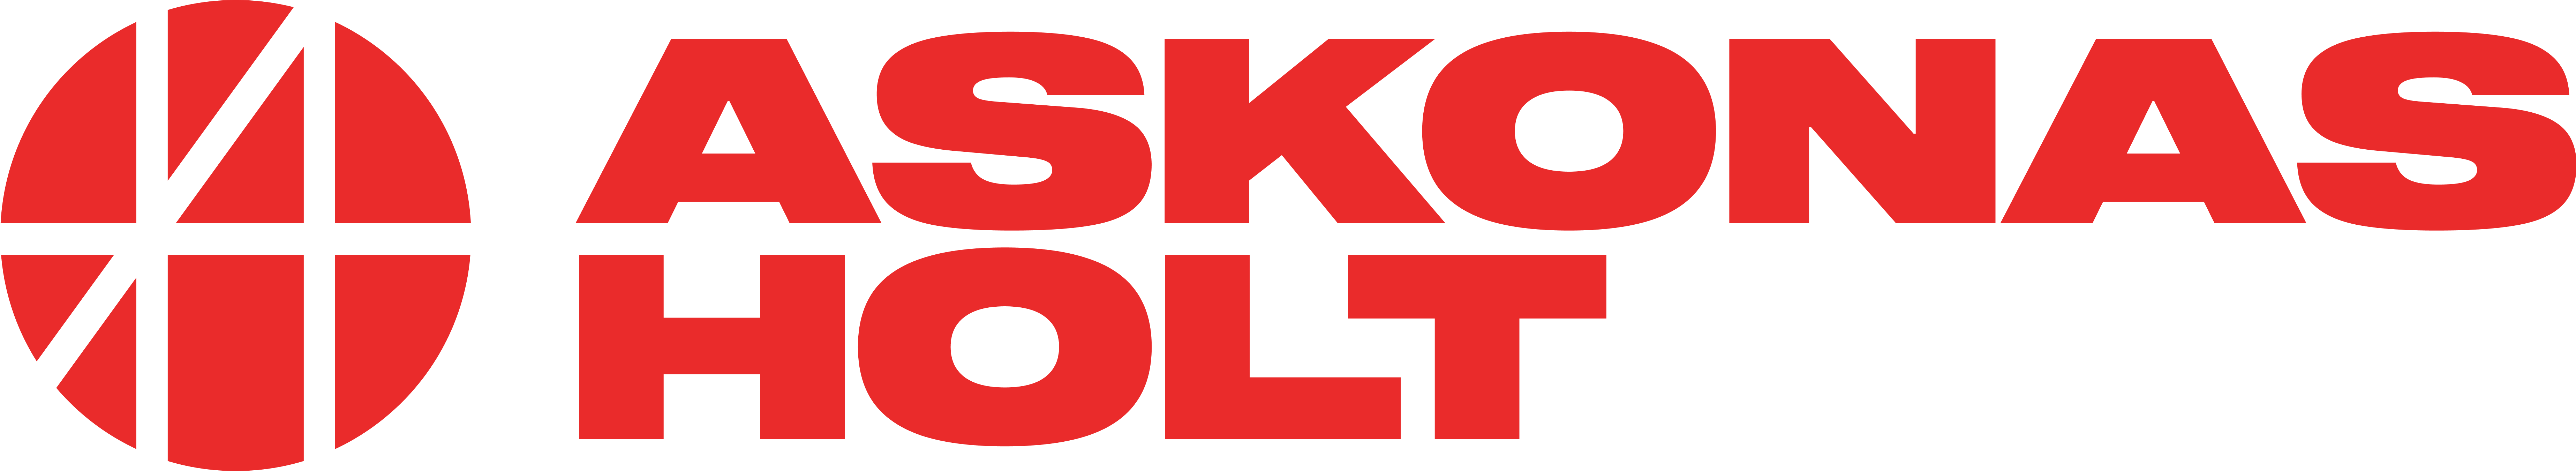 Askonas Holt logo